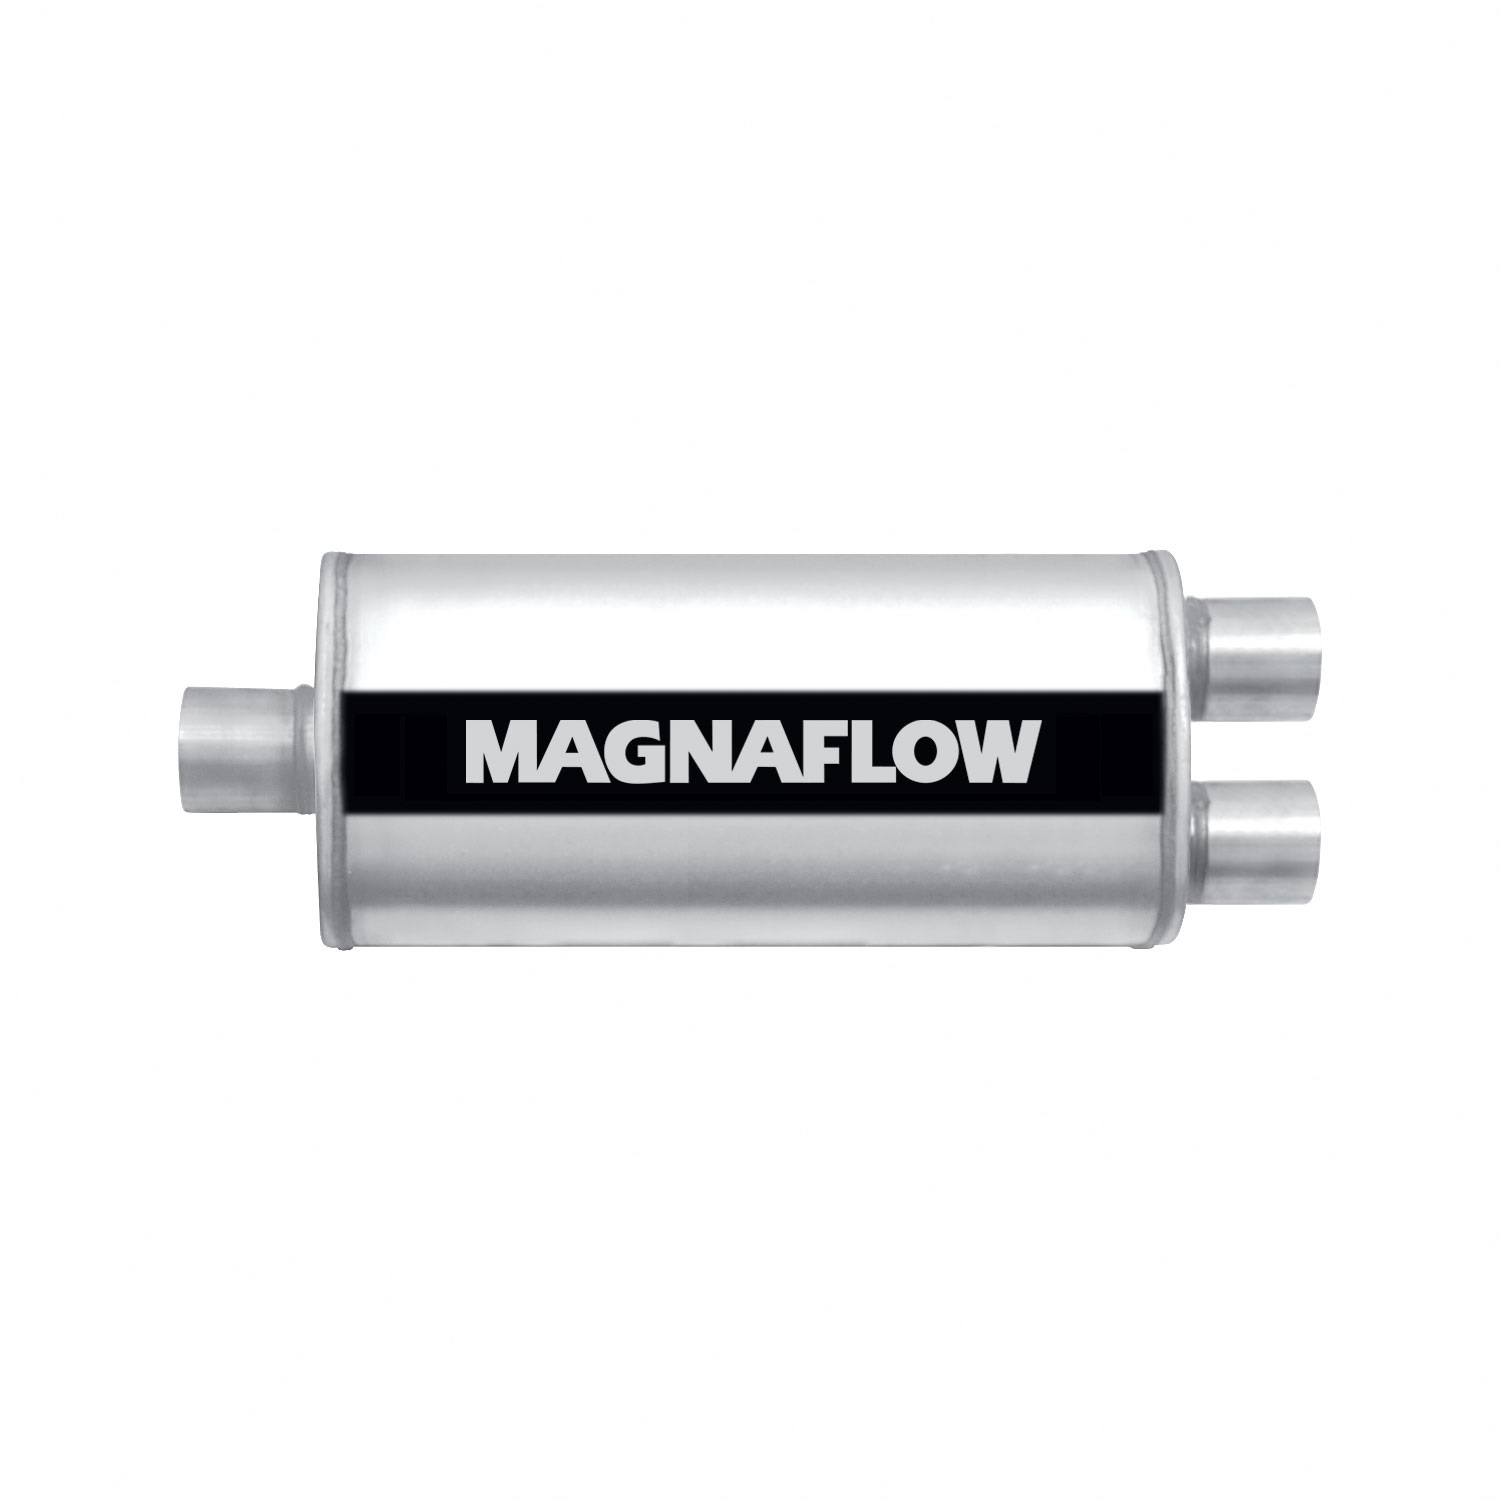 Magnaflow Performance Exhaust Magnaflow Performance Exhaust 12268 Stainless Steel Muffler